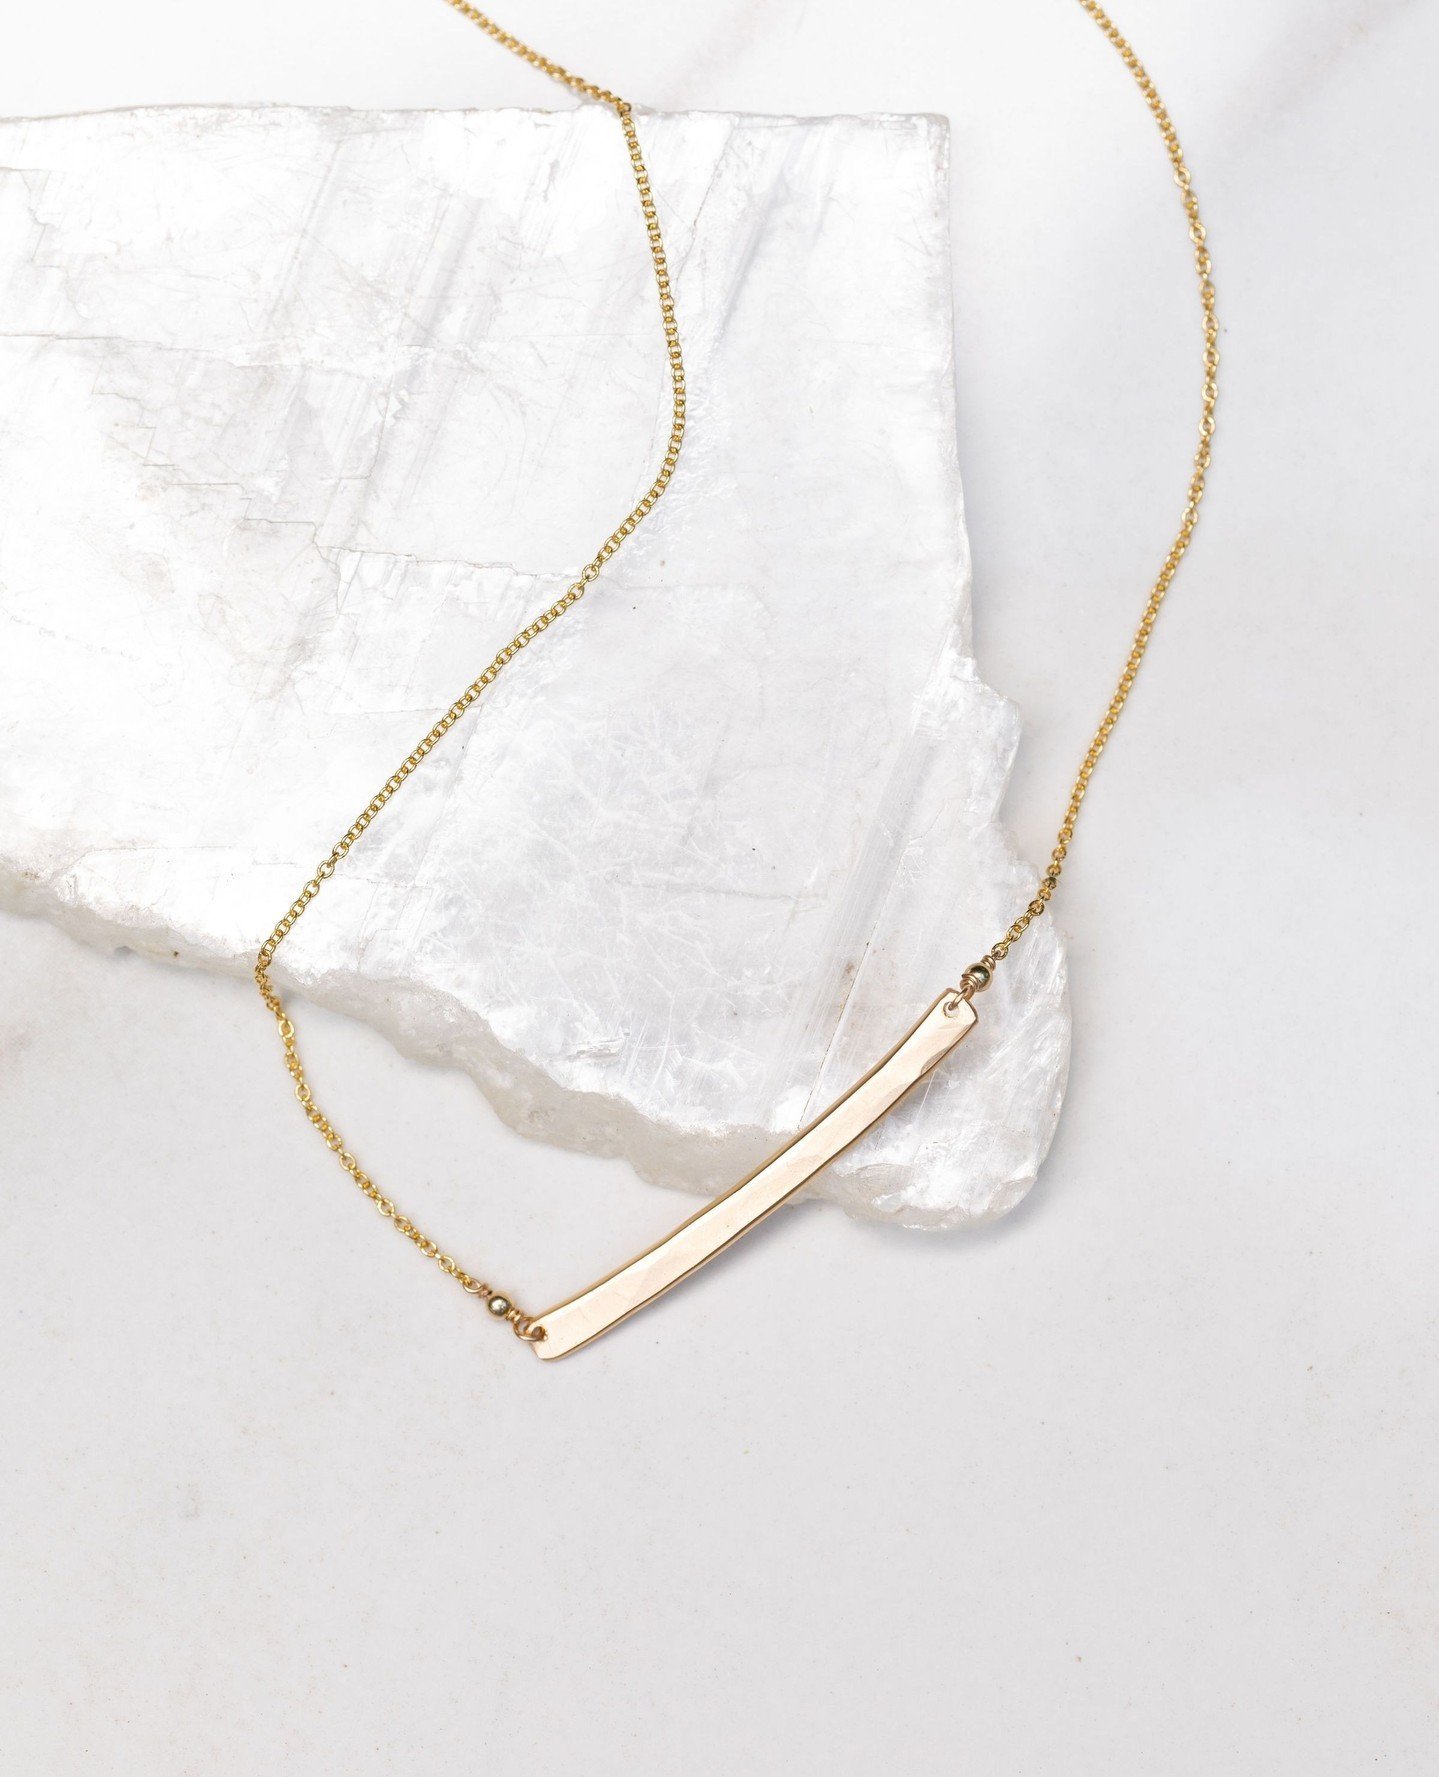 Raise the bar with this simple, delicate necklace⁠
@cierradesigns⁠
⁠
⁠
⁠
⁠
⁠
#goldbar #goldjewelrylover #santacruzmade #capitolavillage #raisethebar #delicatejewelry #goldnecklace #minimaljewelry #simplejewelry #luxestyle